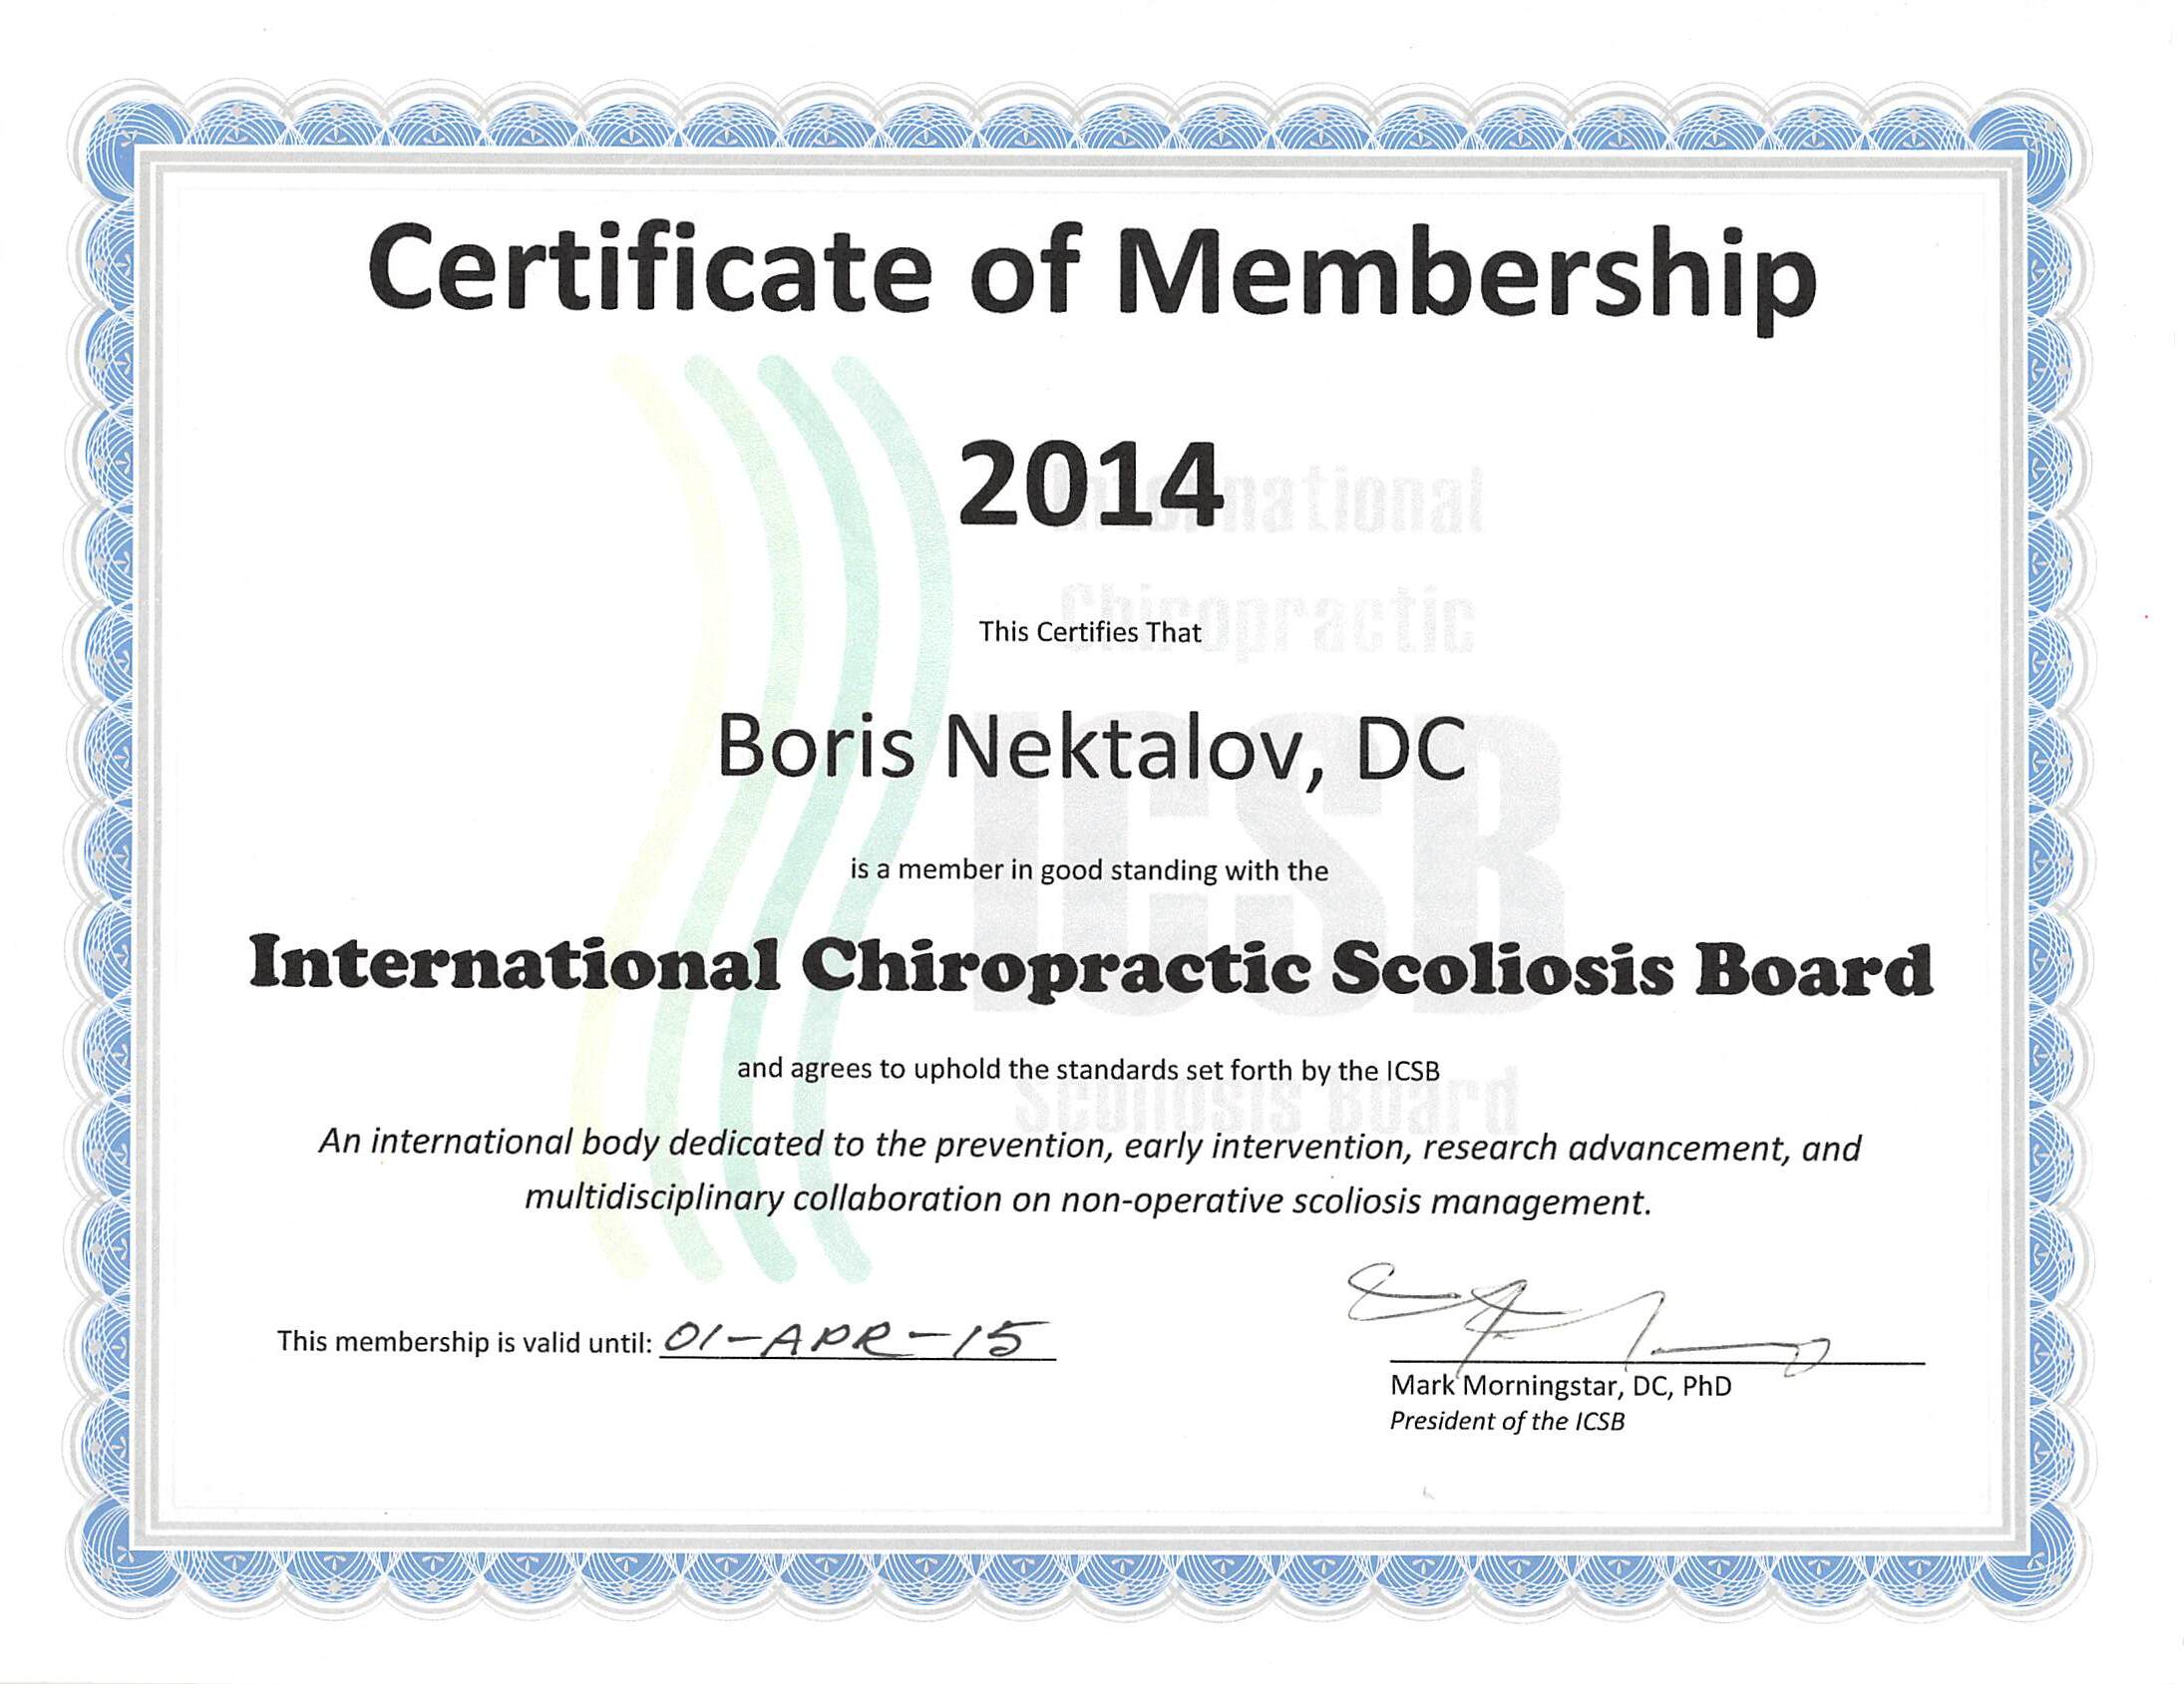 International Chiropractic Scoliosis Board